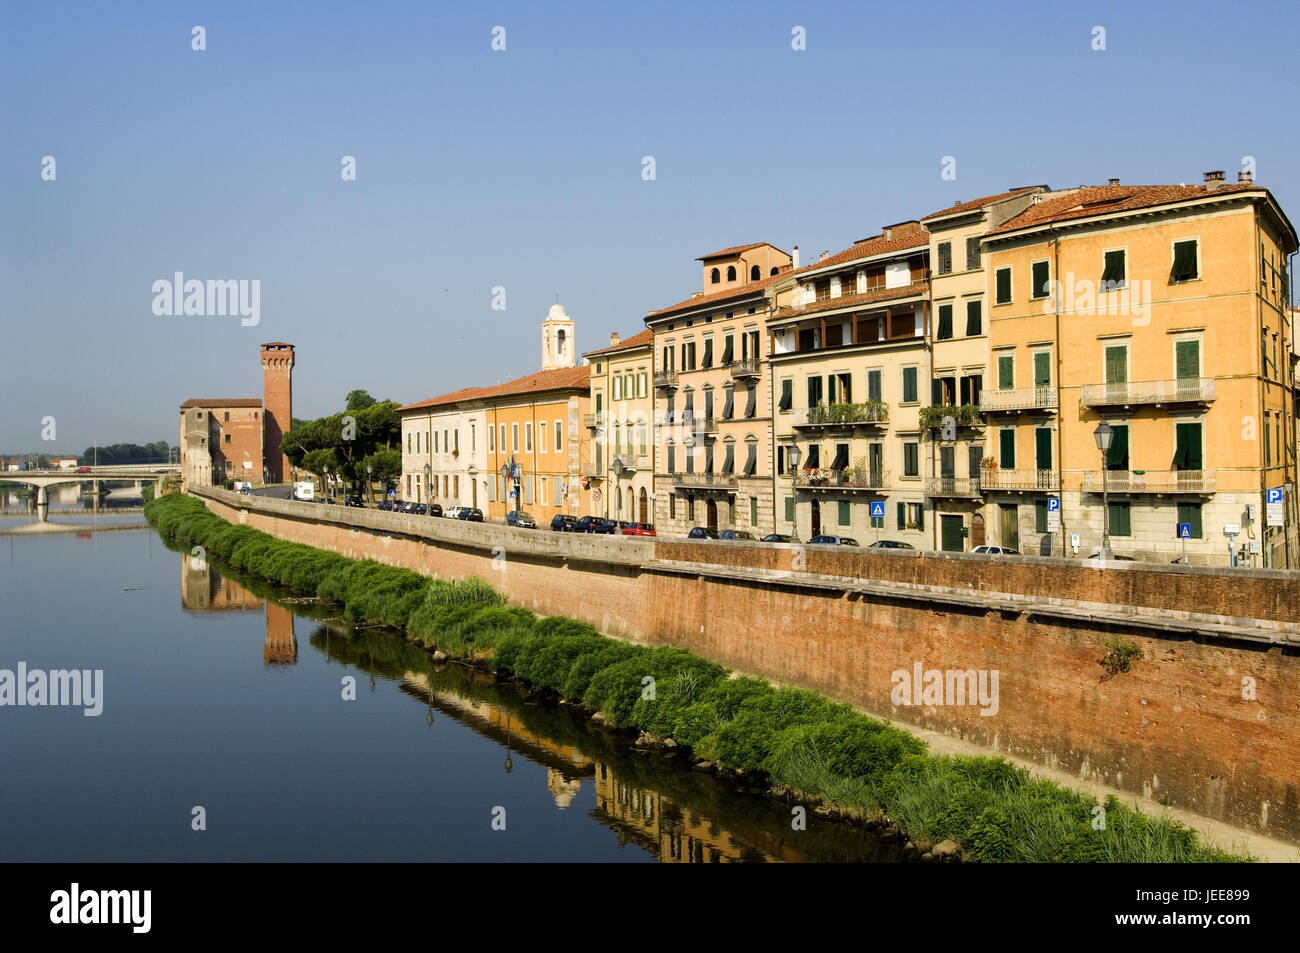 Italien, Toskana, Pisa, Arno, Festung Vecchia, Stockfoto